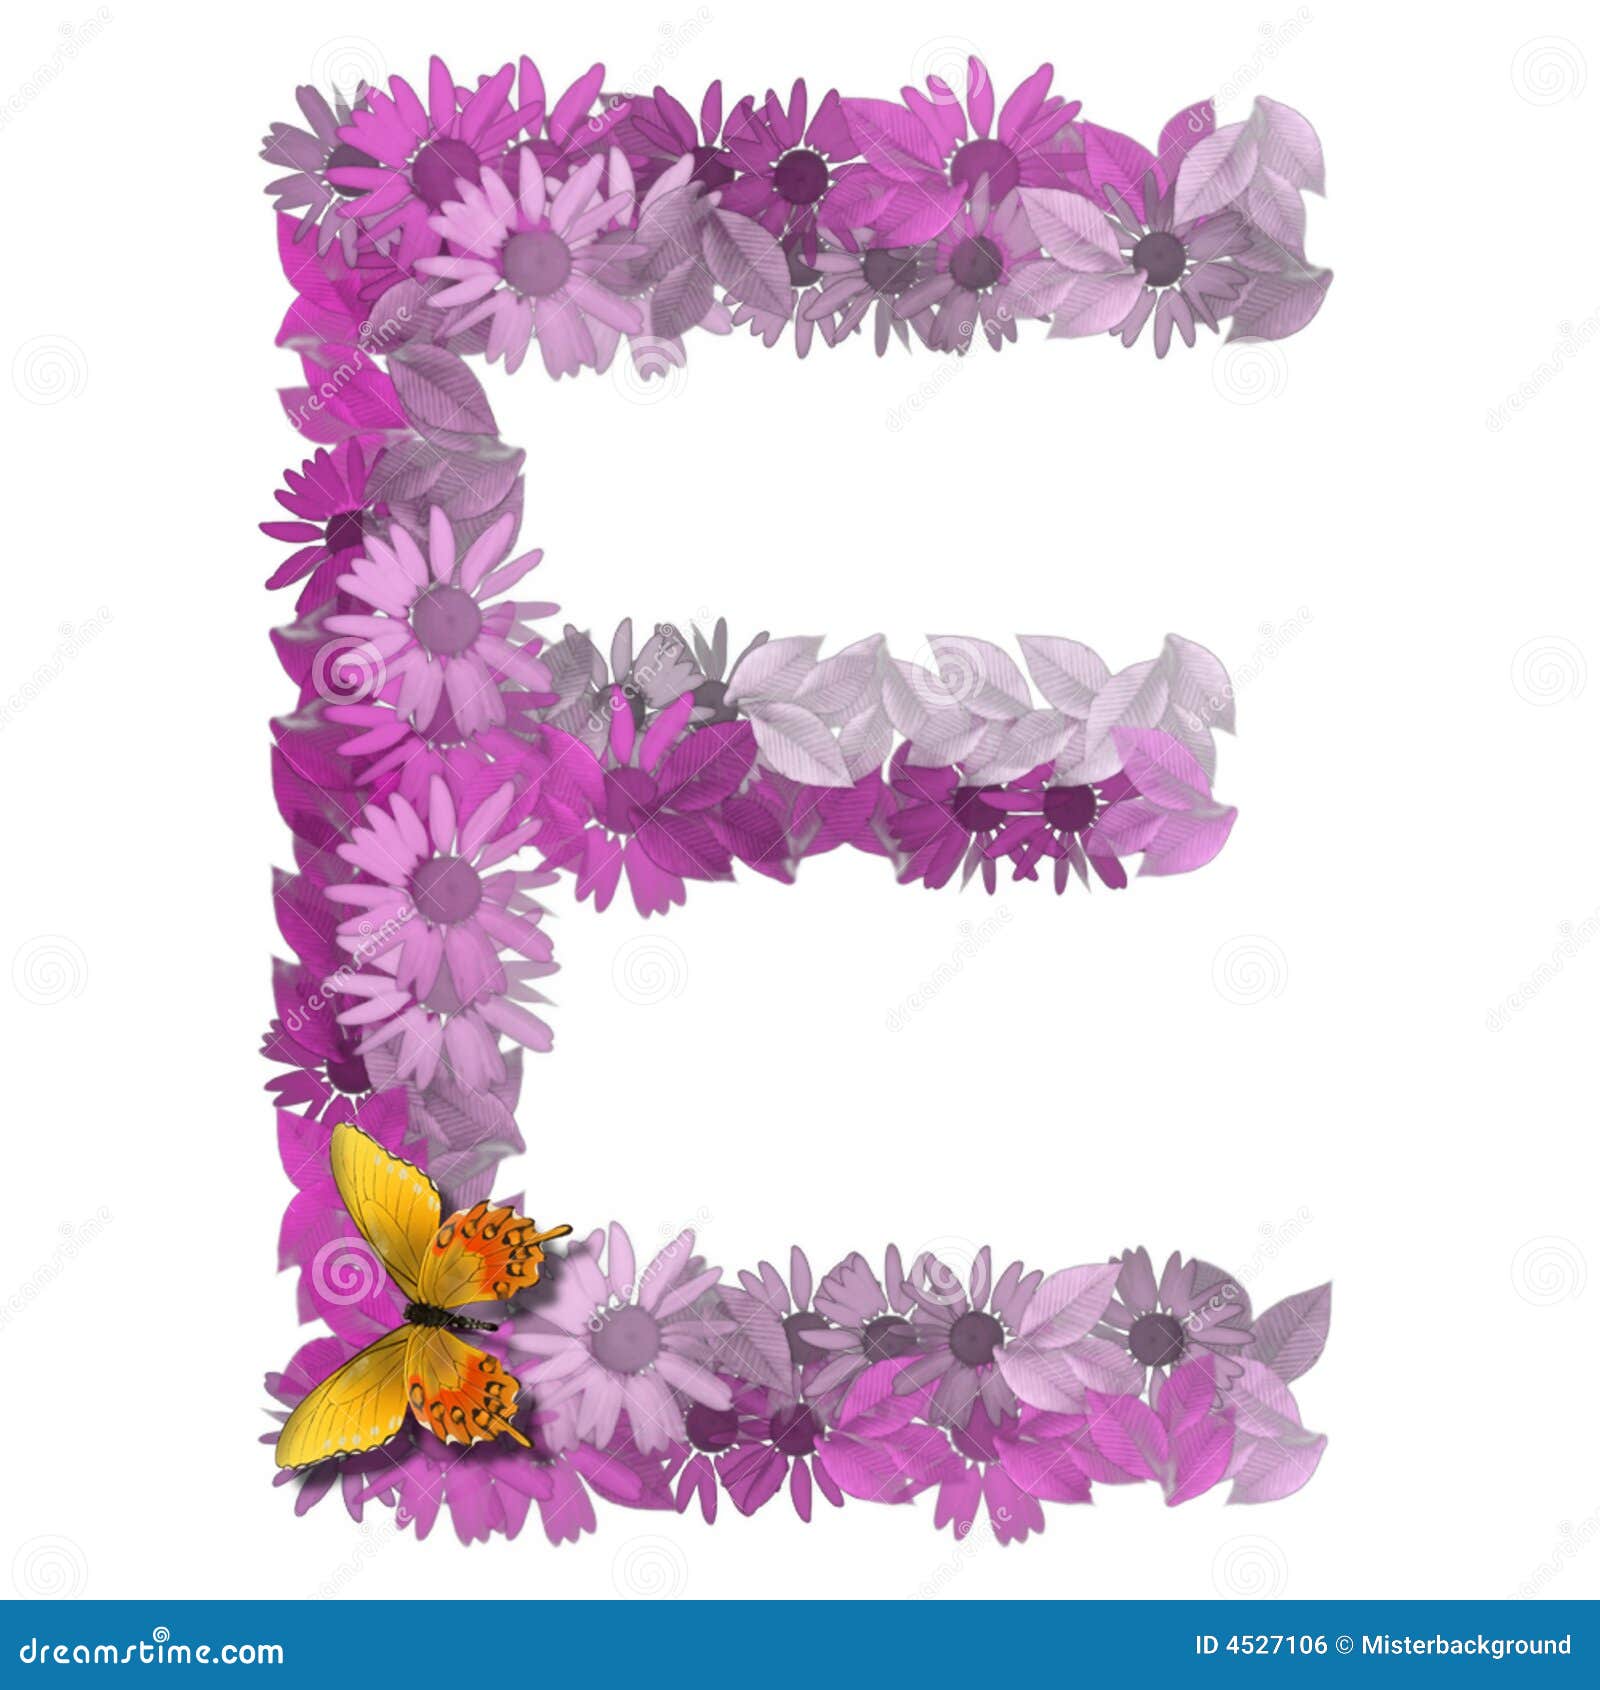 alphabetical letter vowel e